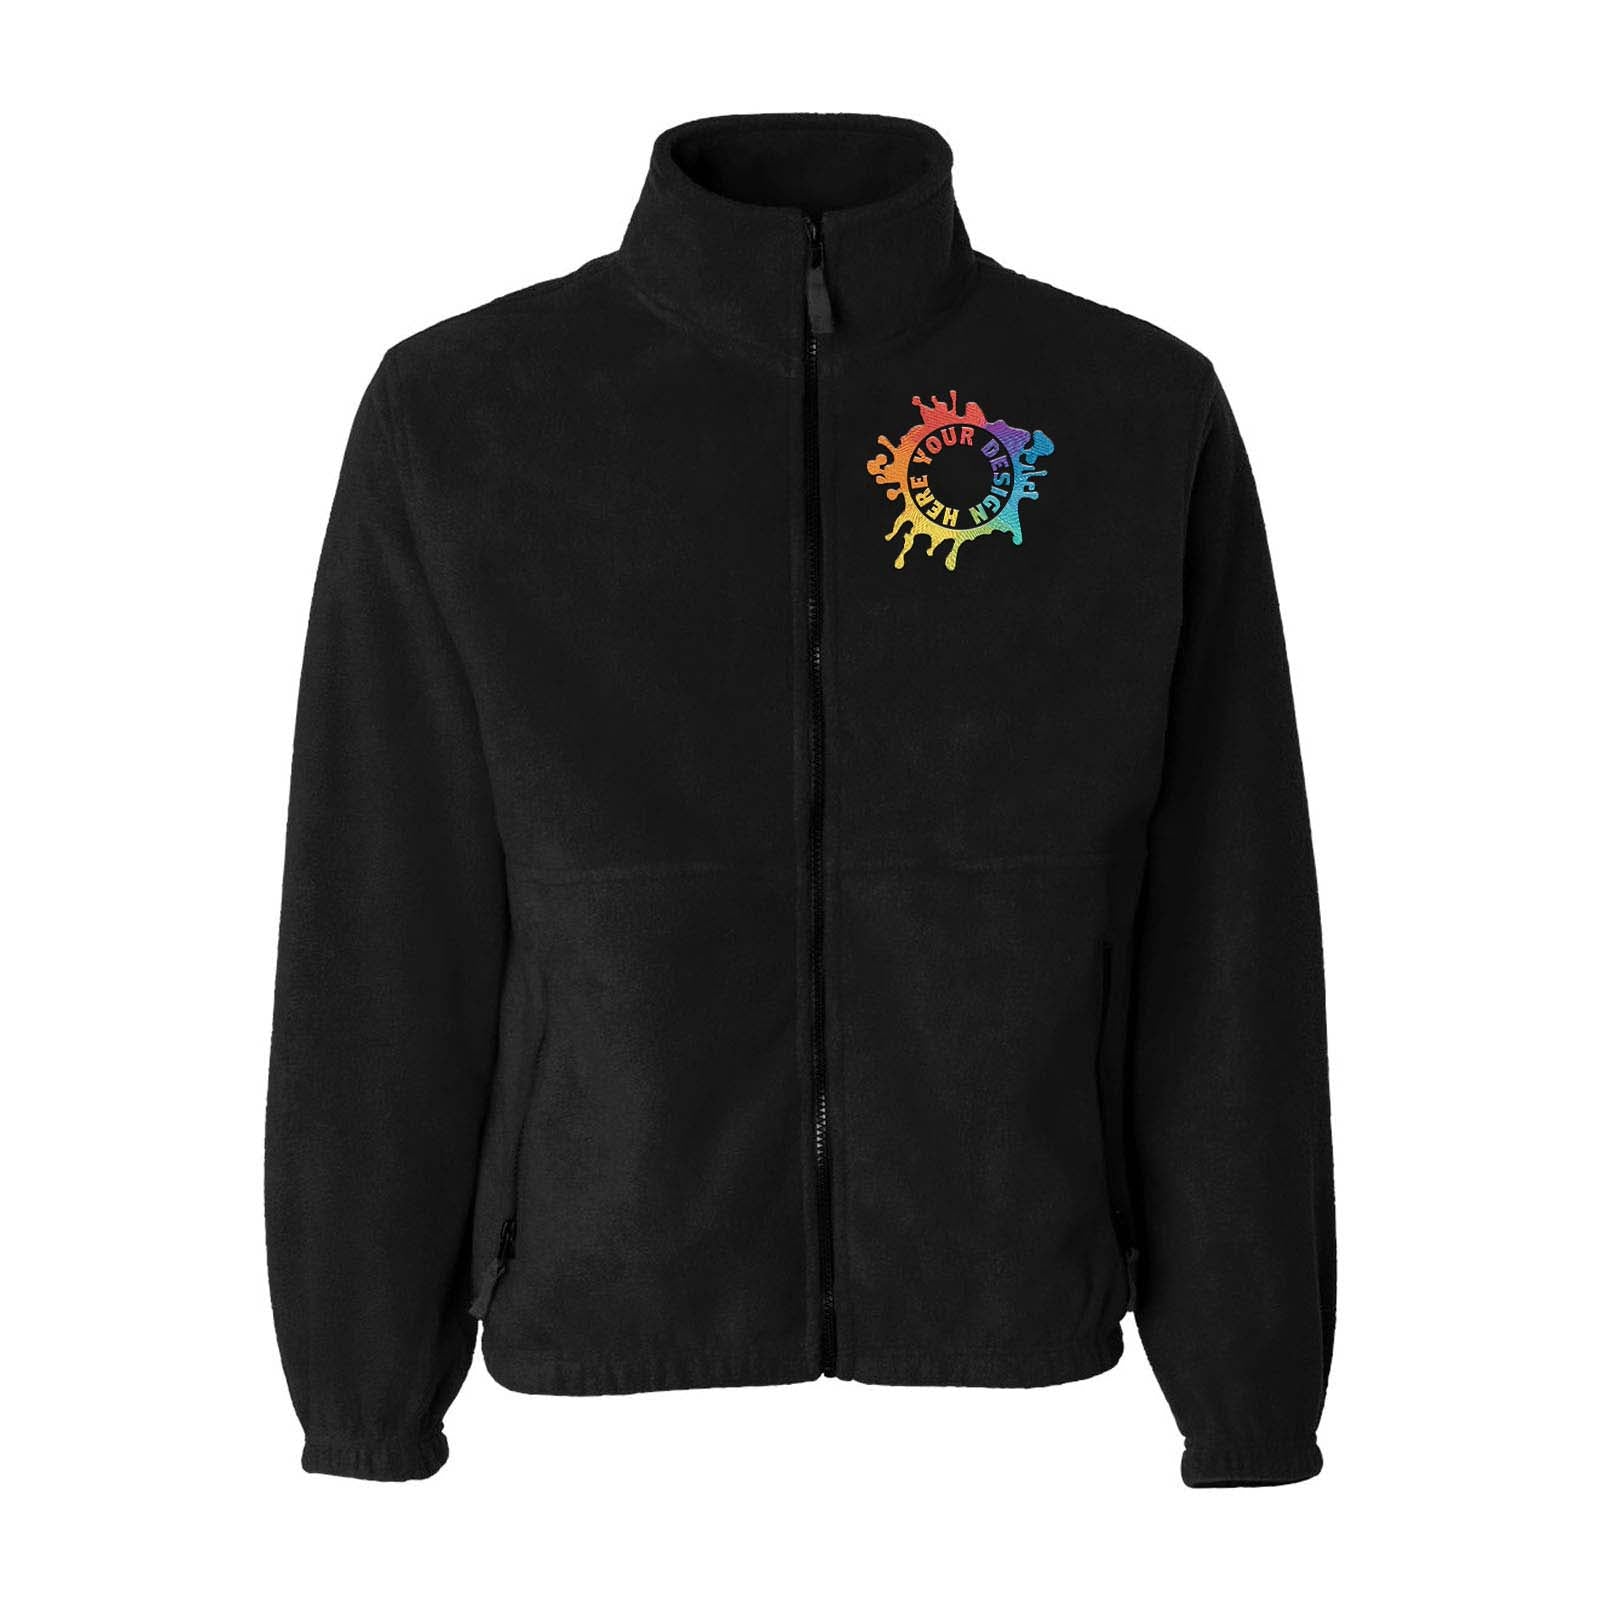 Sierra Pacific Fleece Full-Zip Jacket Embroidery - Mato & Hash